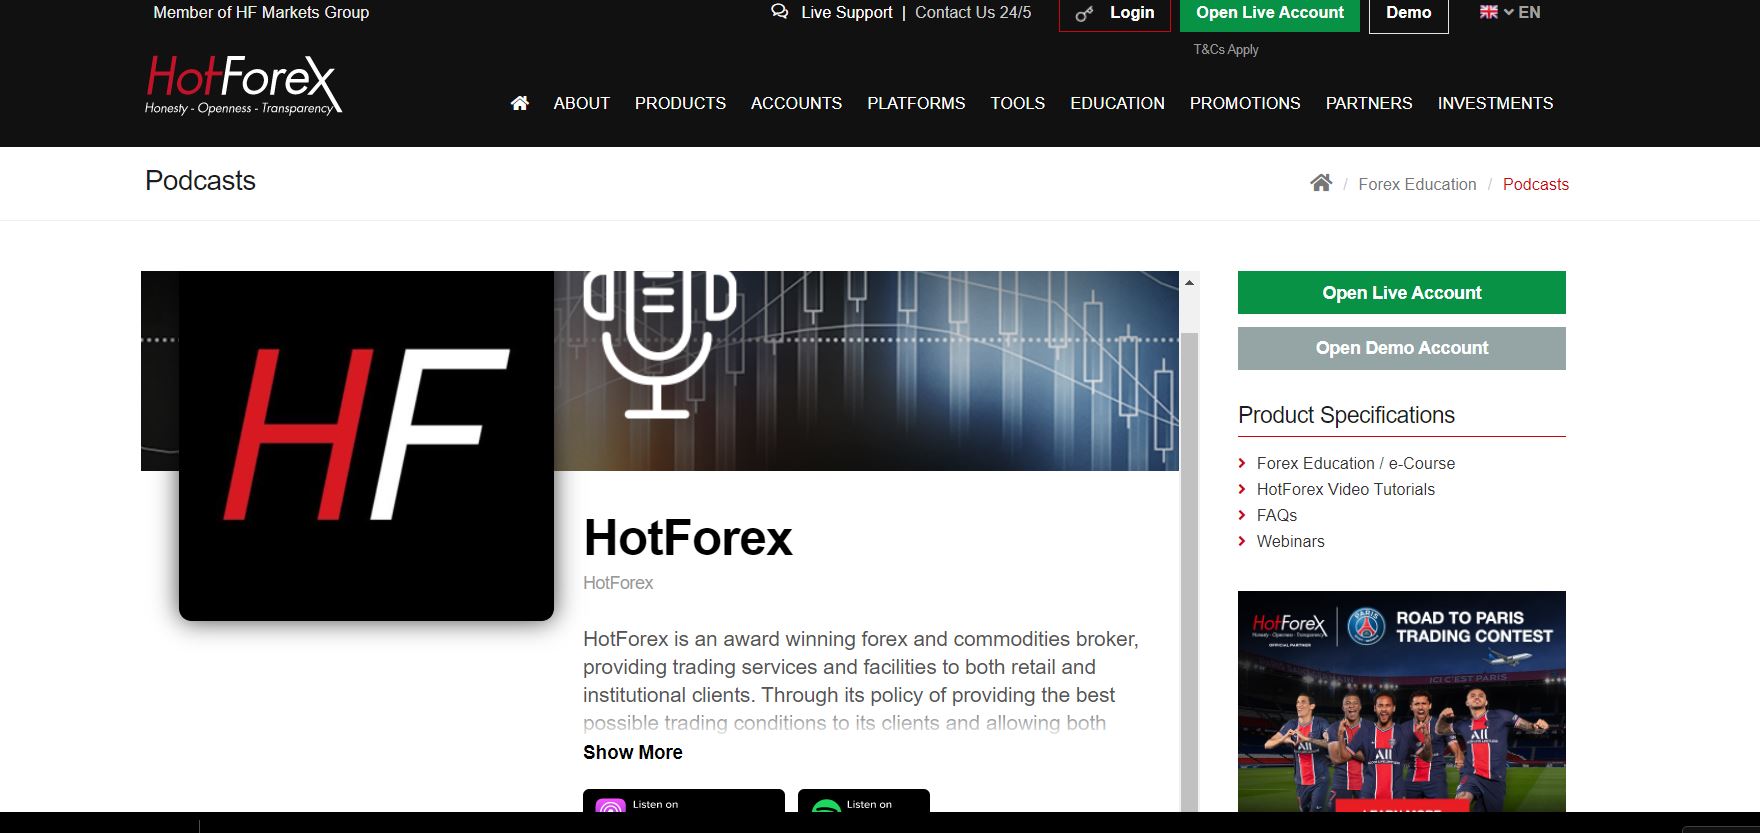 HotForex Podcasts